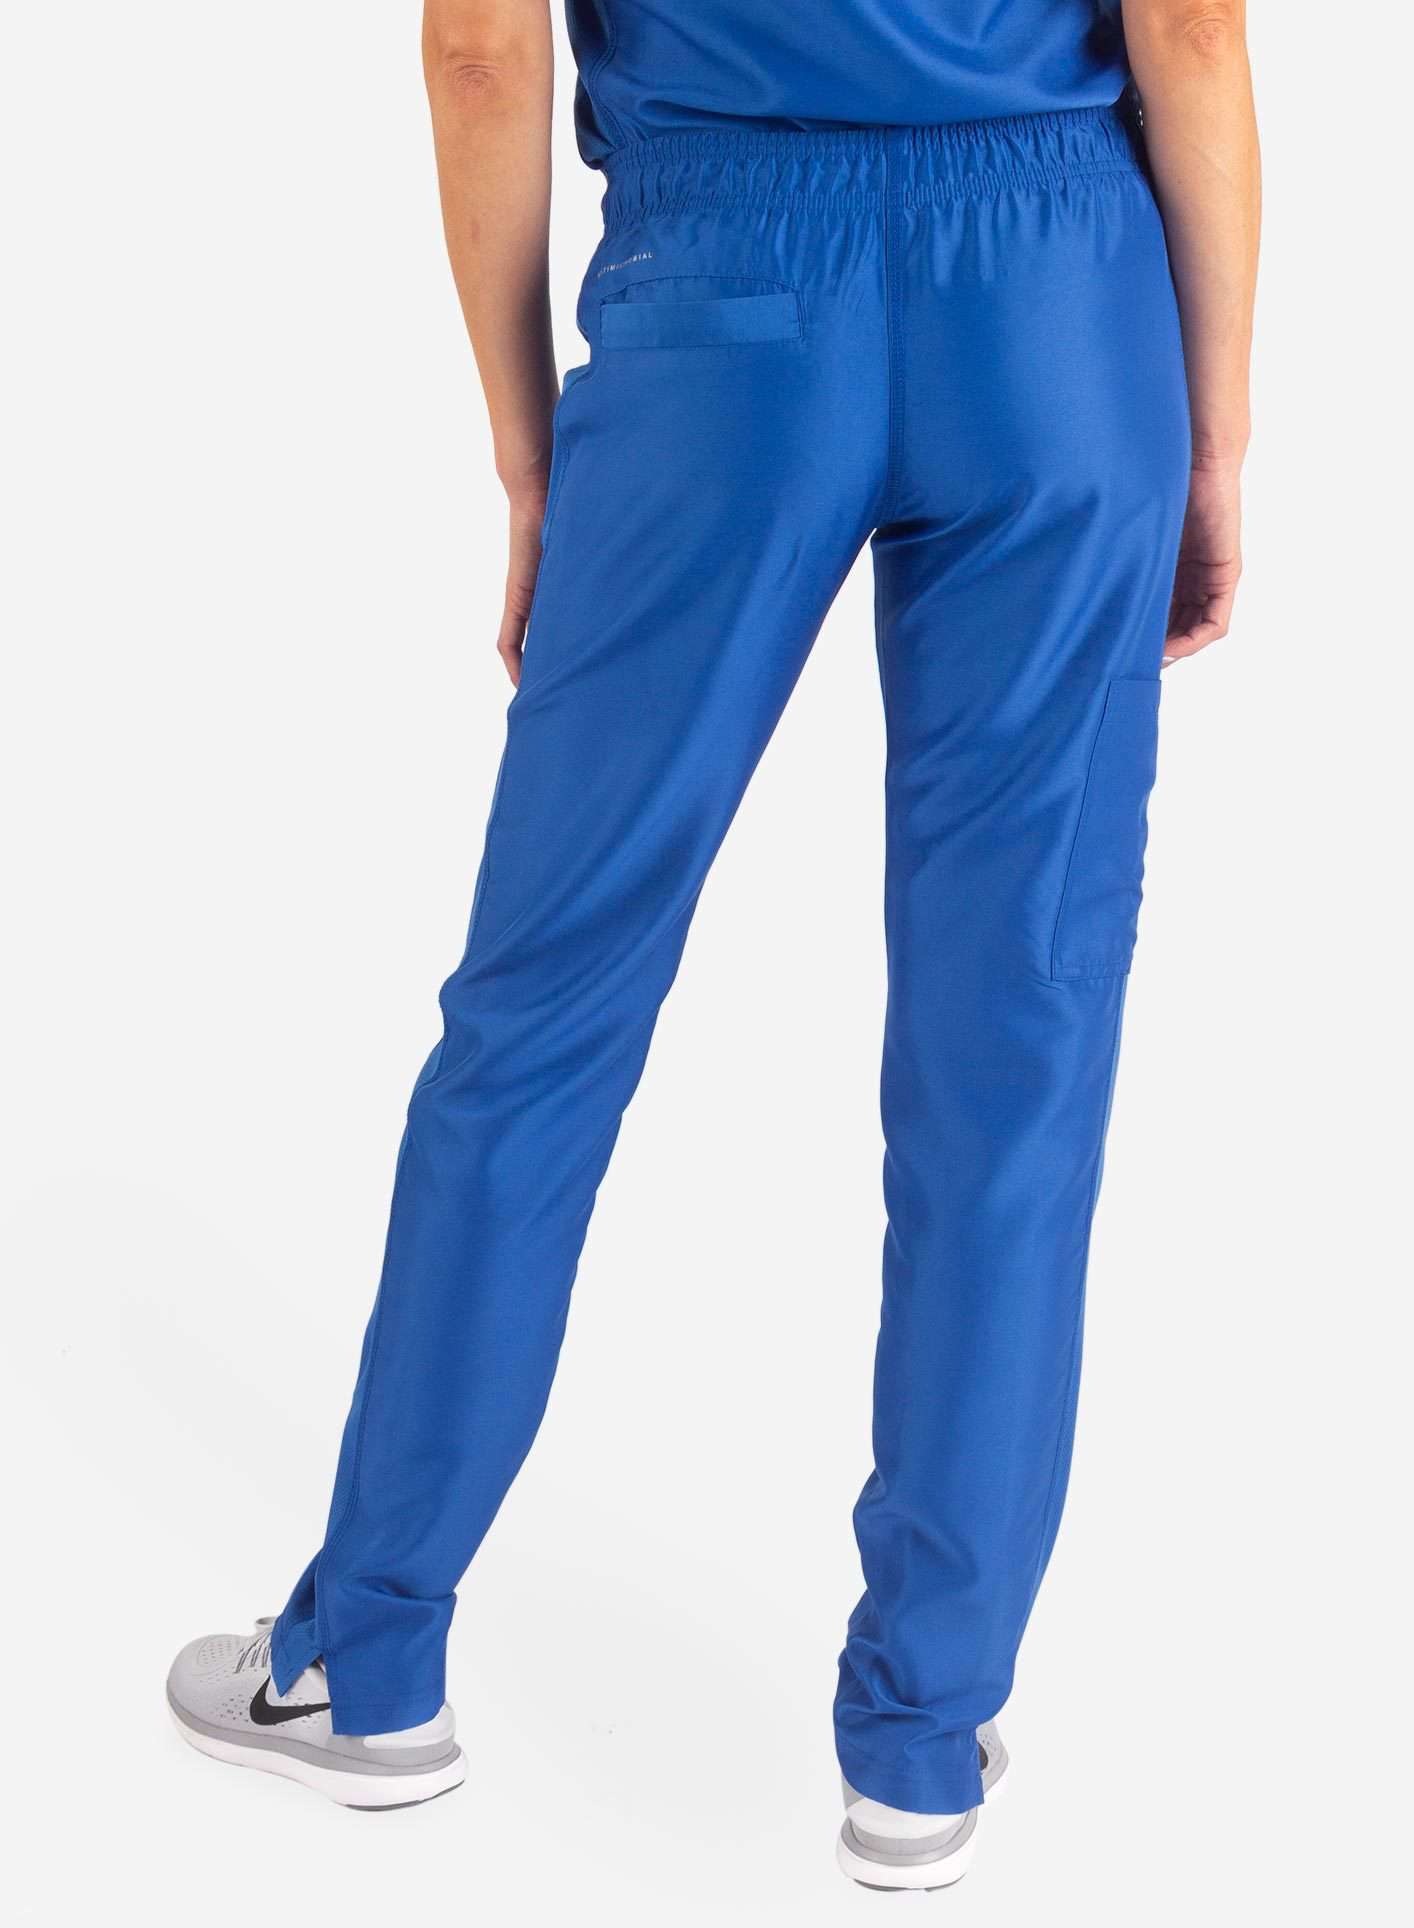 Women's Slim Fit Scrub Pants in royal-blue